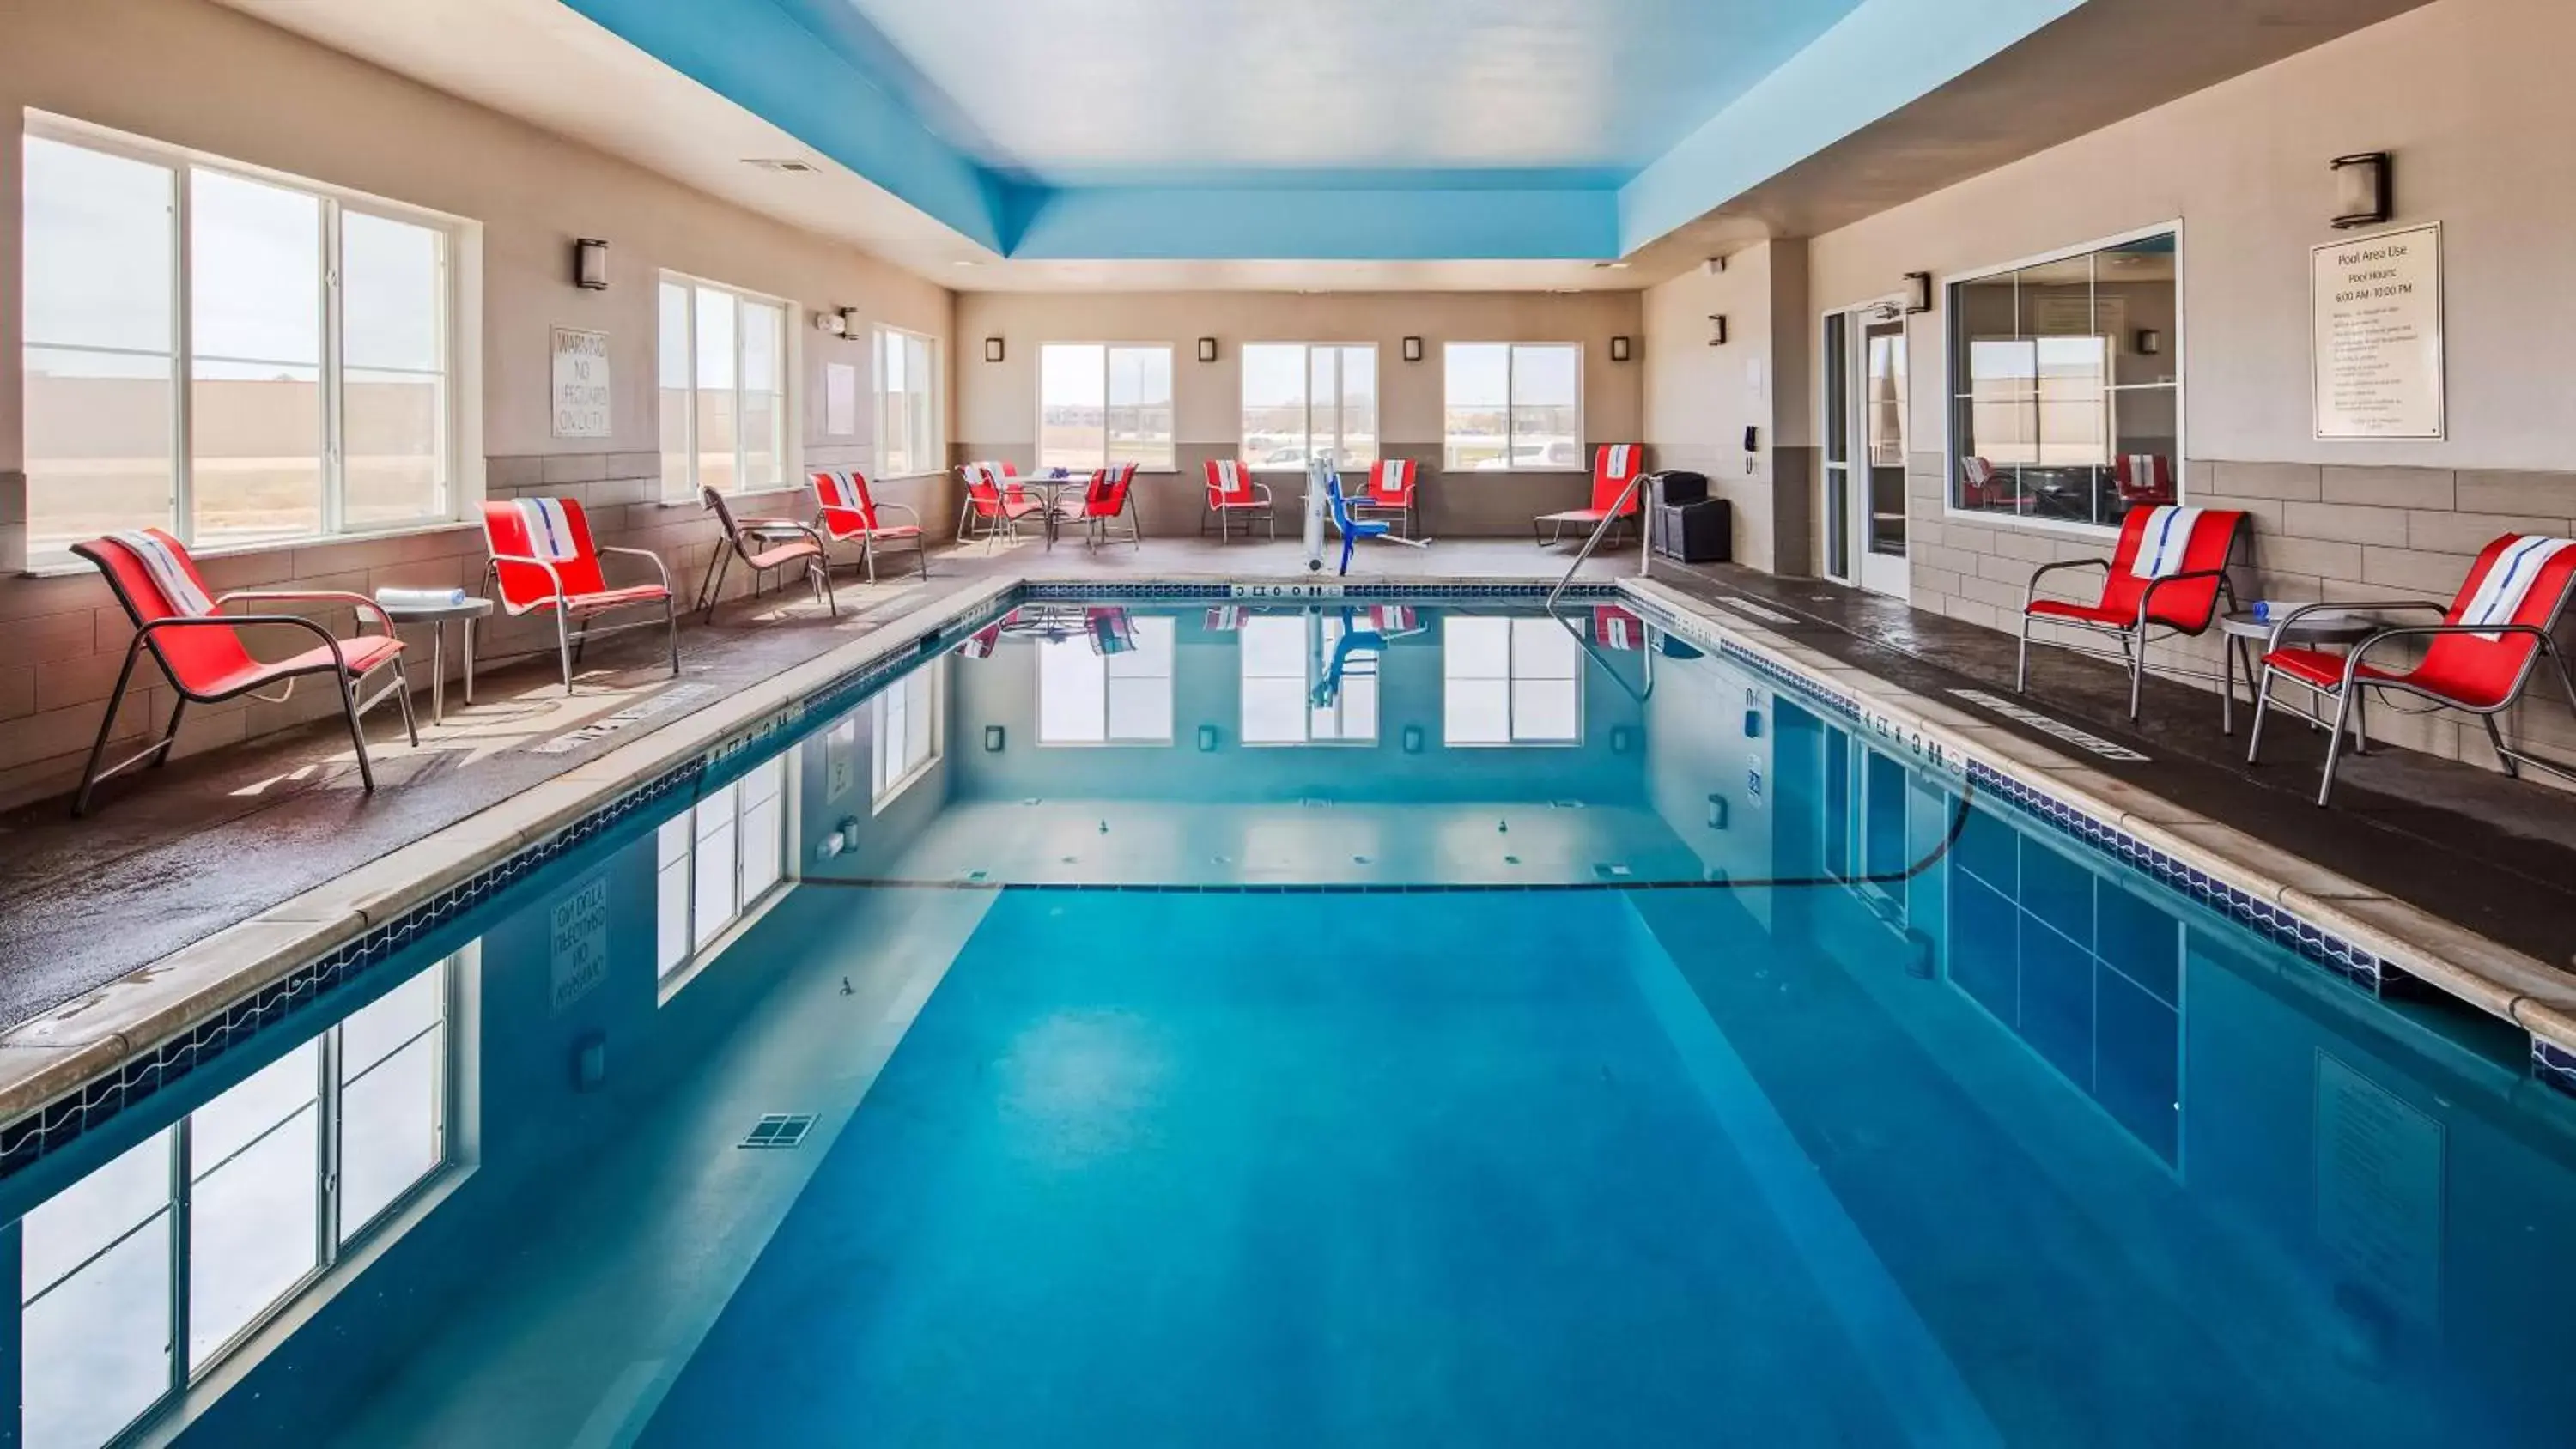 On site, Swimming Pool in Best Western Plus Tech Medical Center Inn